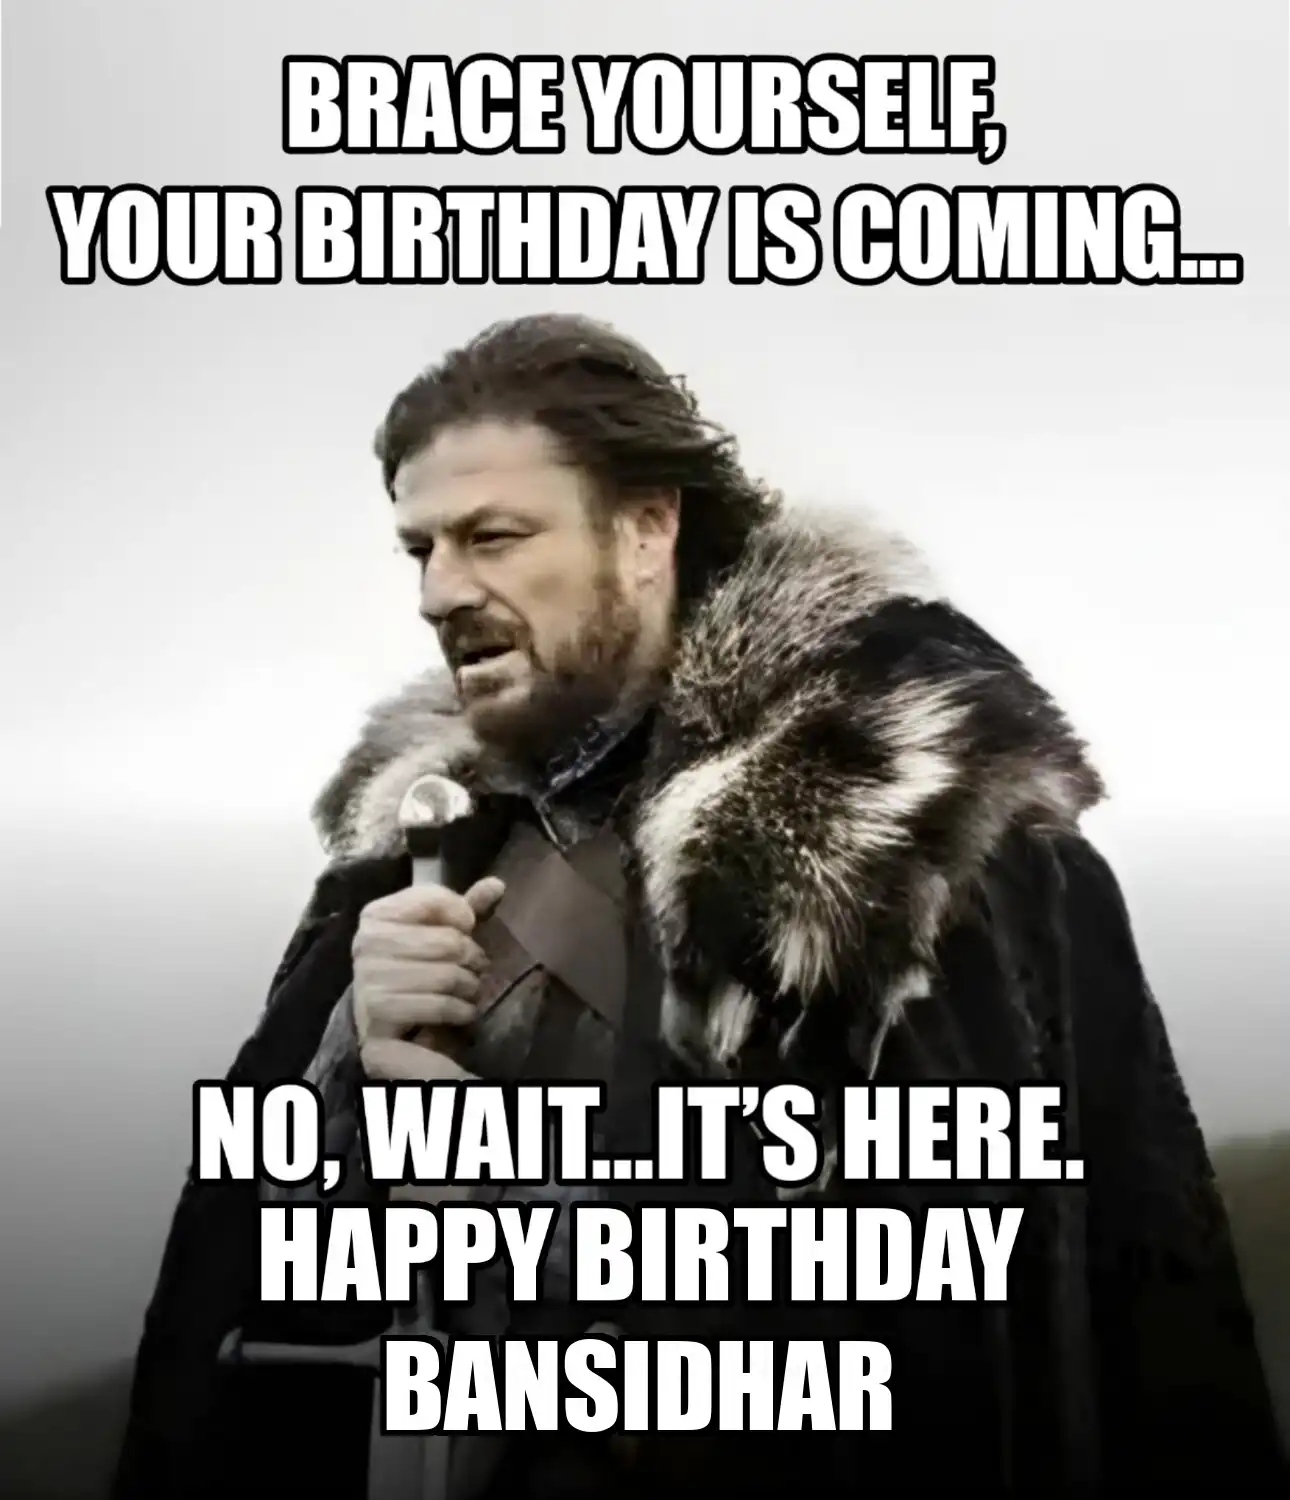 Happy Birthday Bansidhar Brace Yourself Your Birthday Is Coming Meme